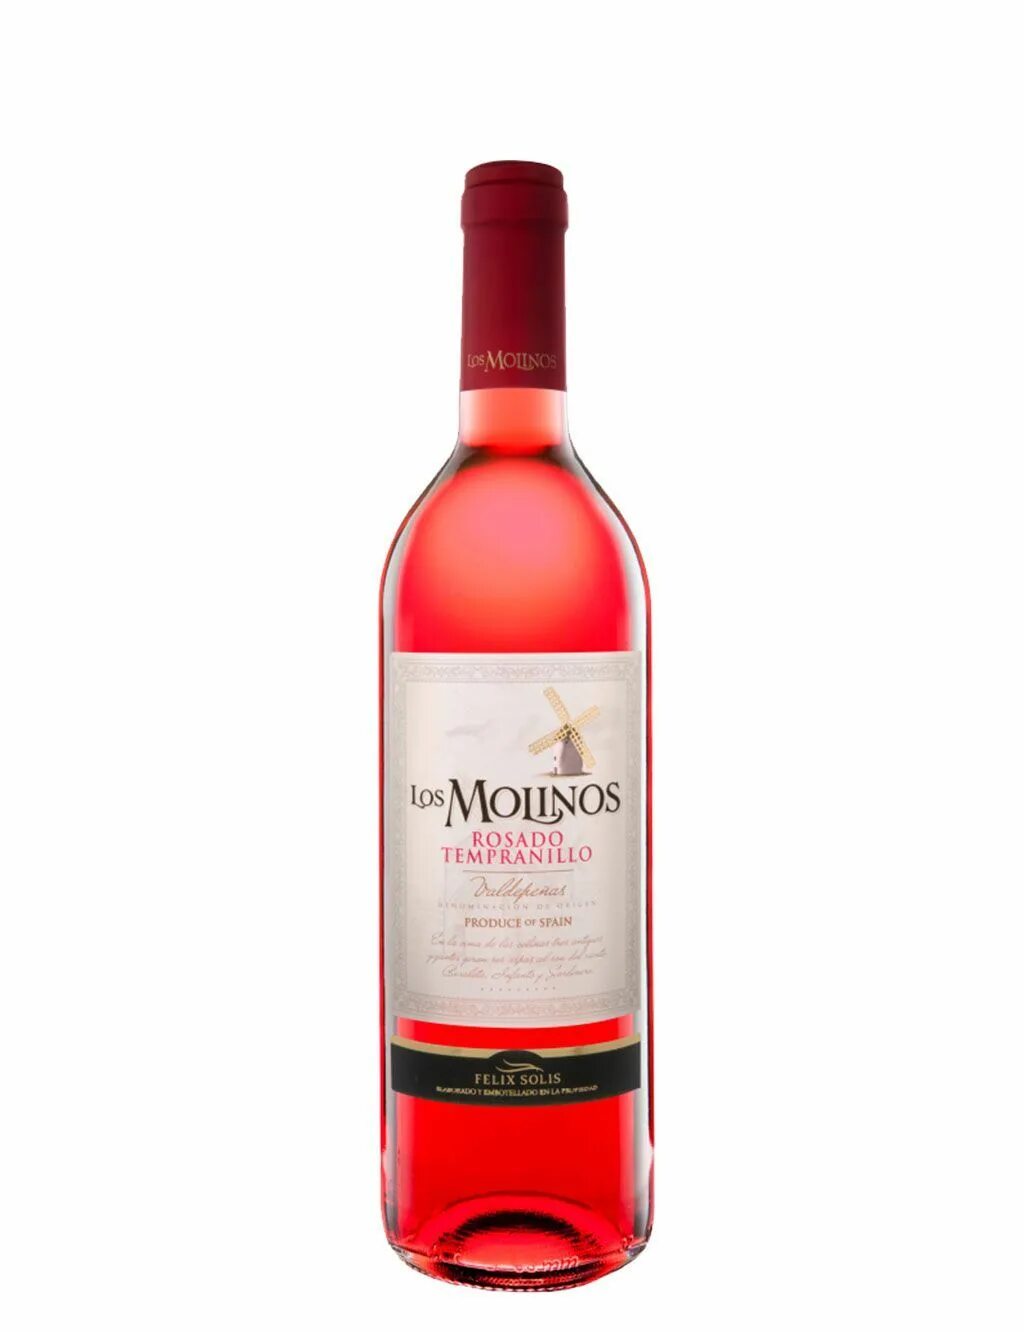 Розовые вина испании. Испанское вино Лос Молинос. Los Molinos Tempranillo вино. Темпранильо вино Испания розовое.